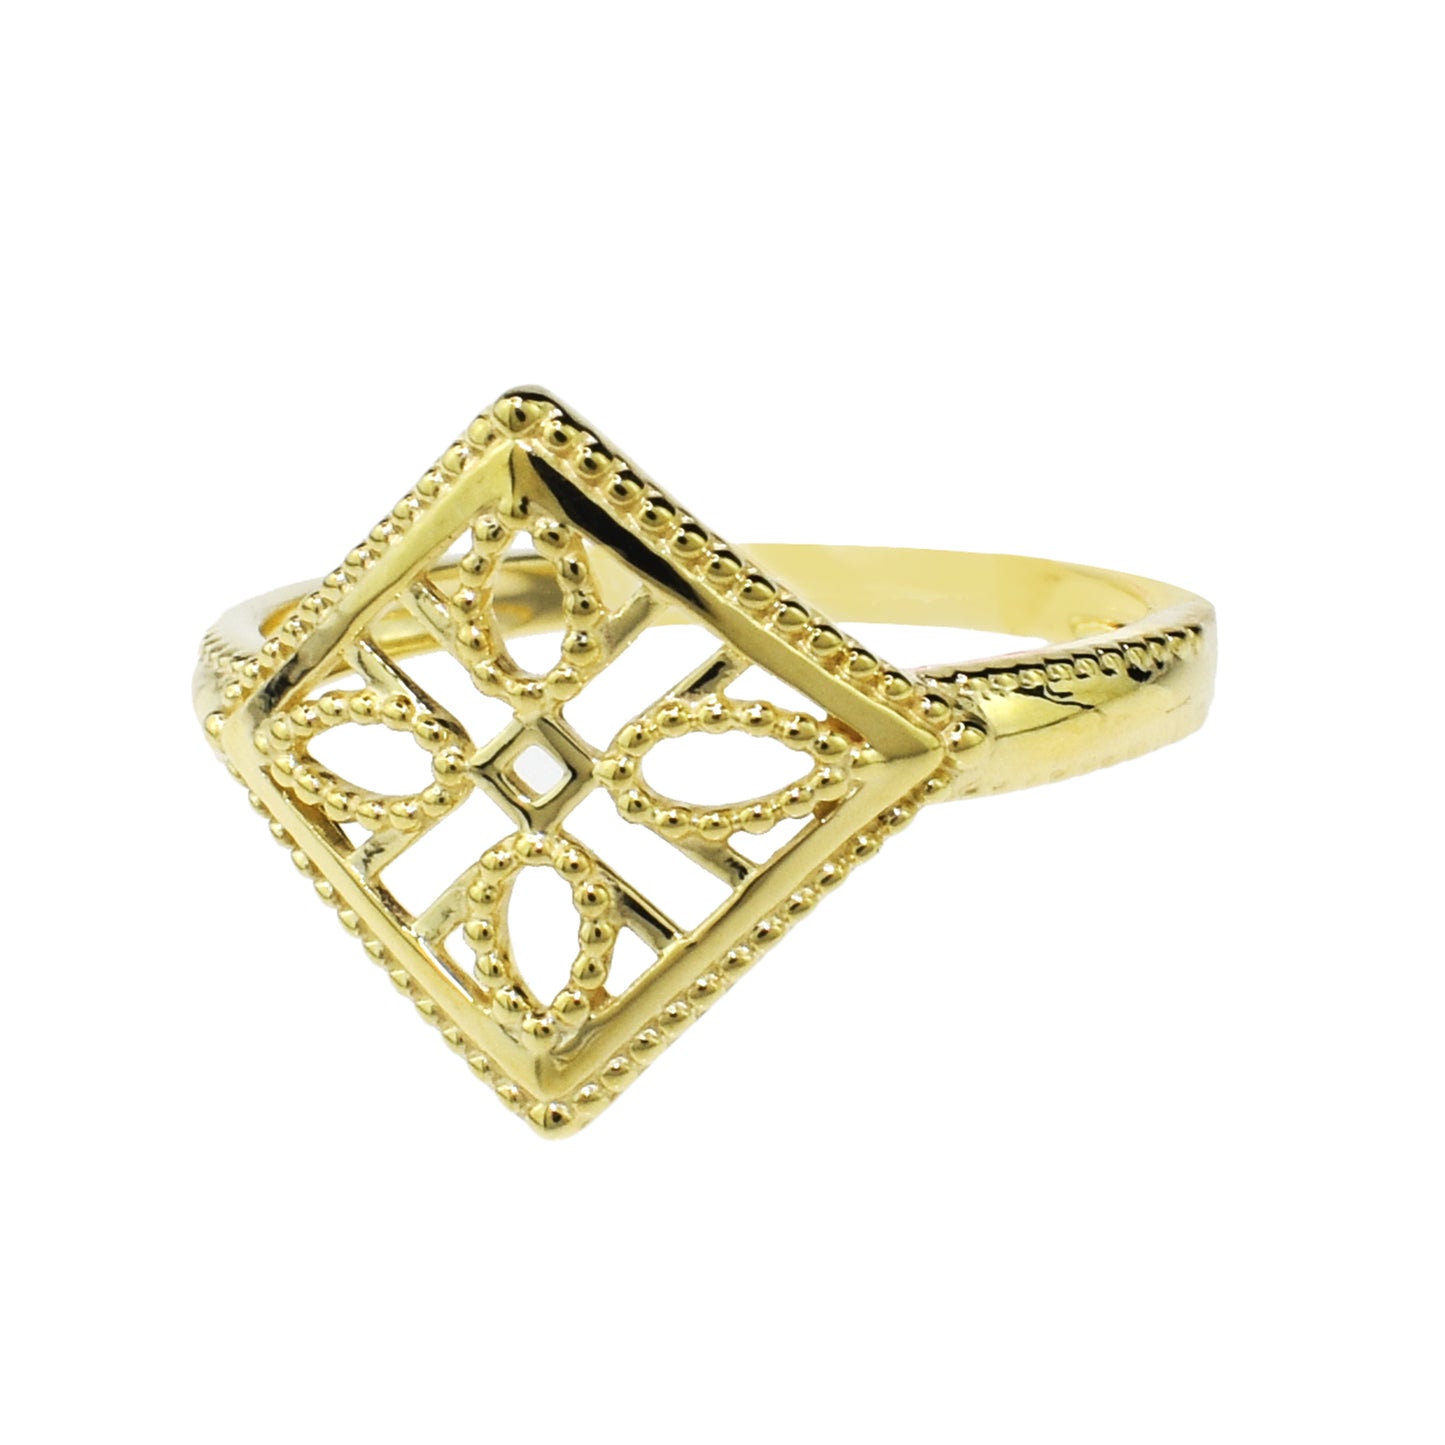 Séchic 14k Gold Deco Style Ring